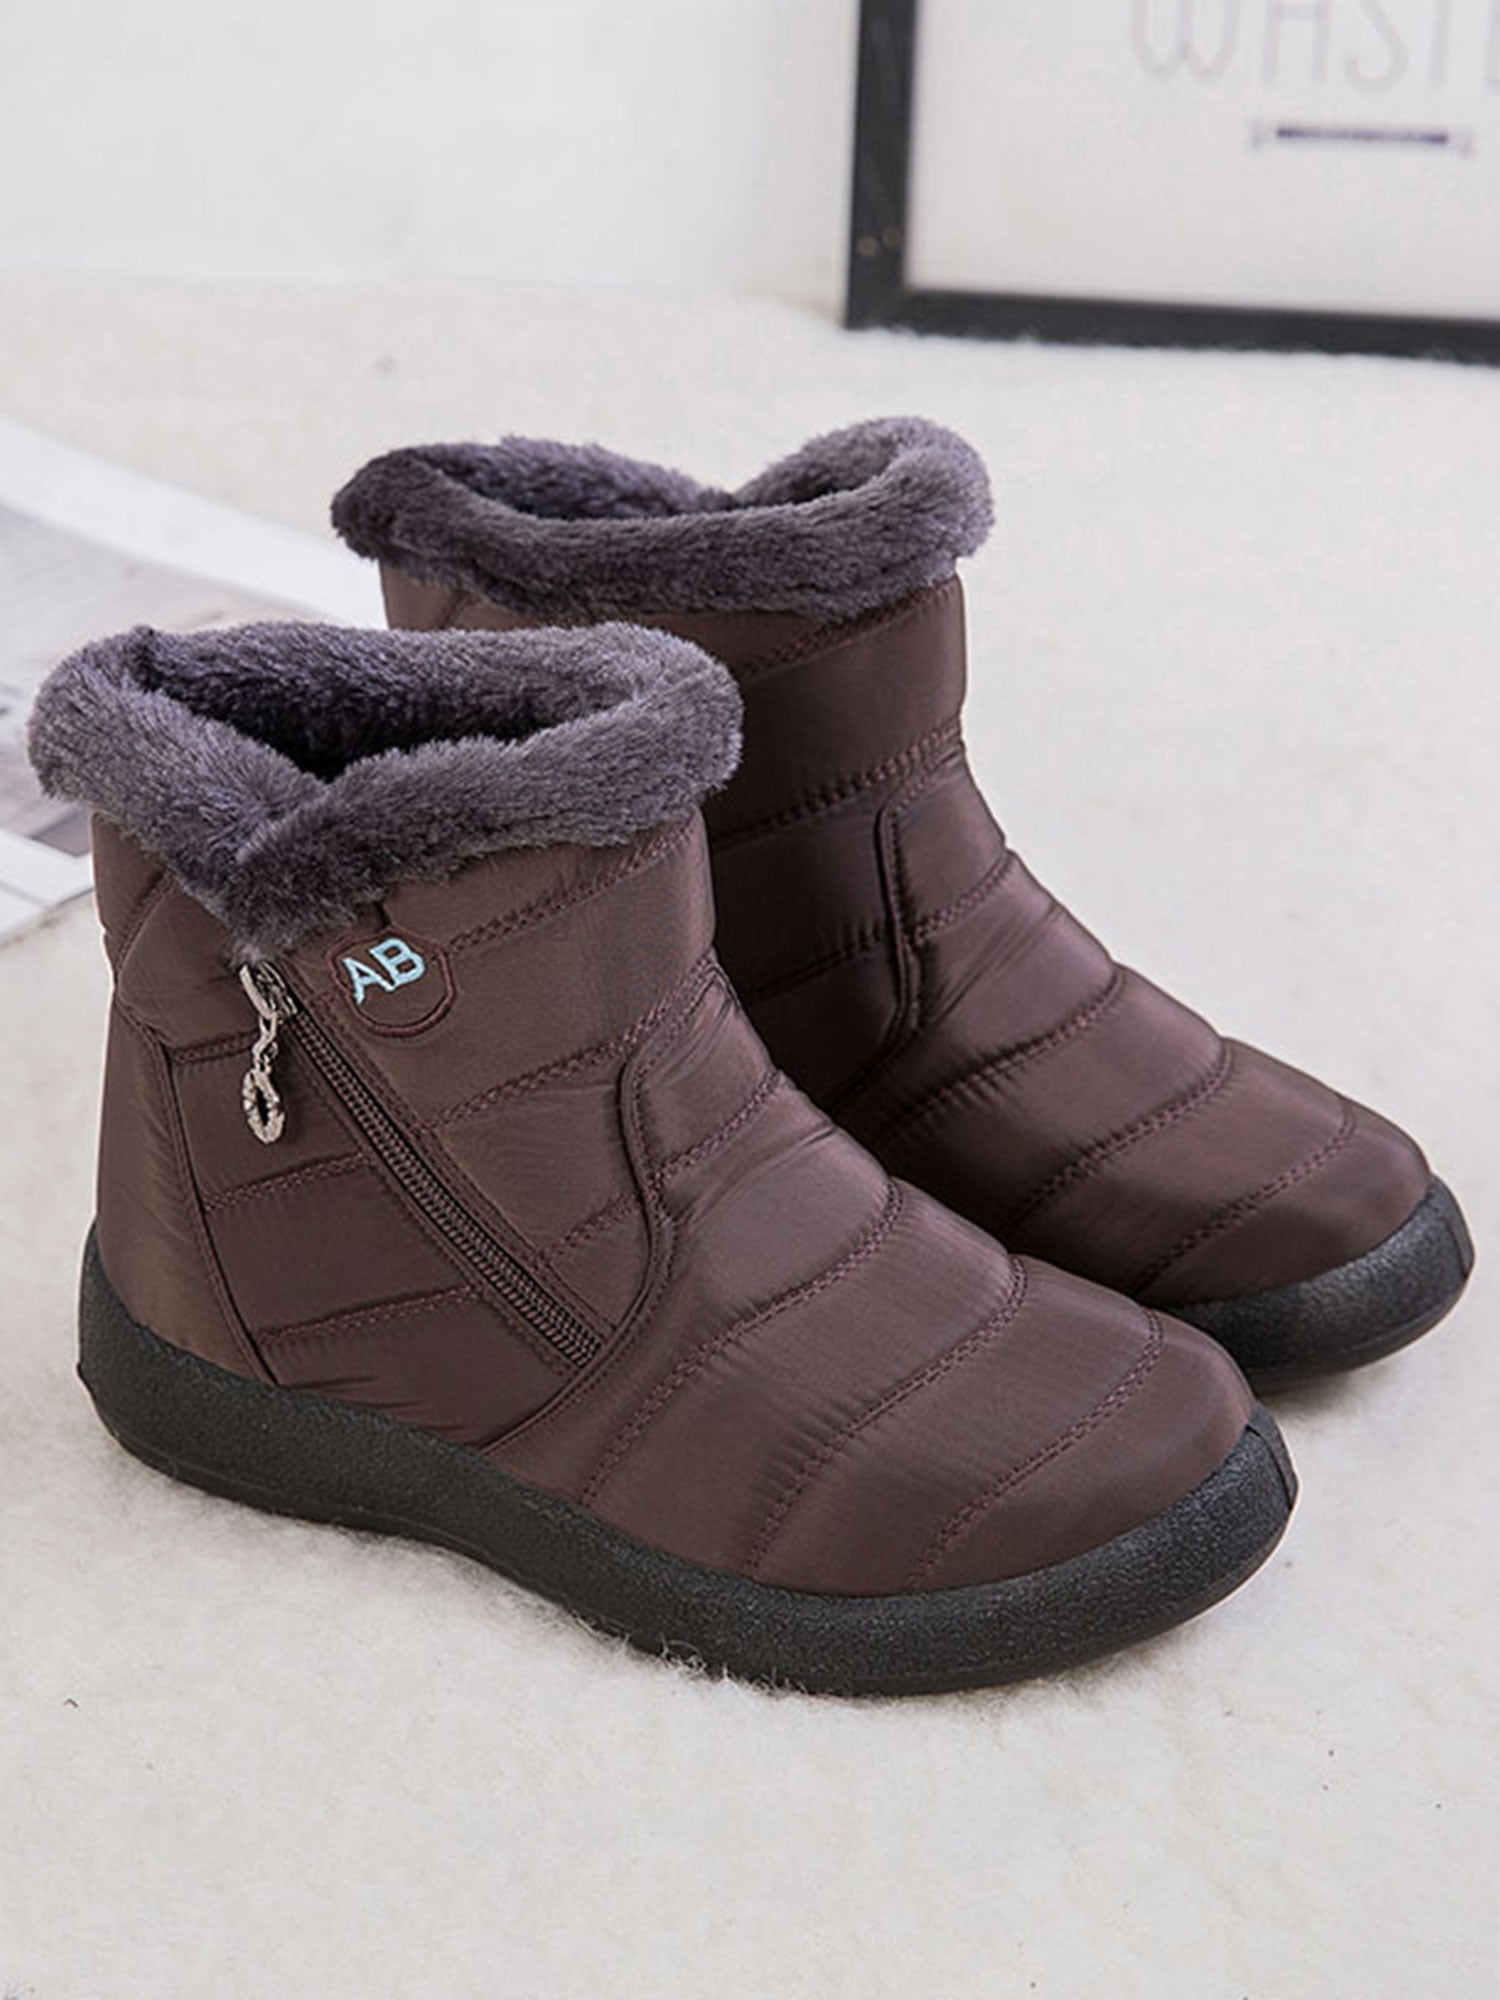 Details about   Womens Ladies Fashion Patent Leather Lamb Fur Lace Up Winter Snow Boots Shoes